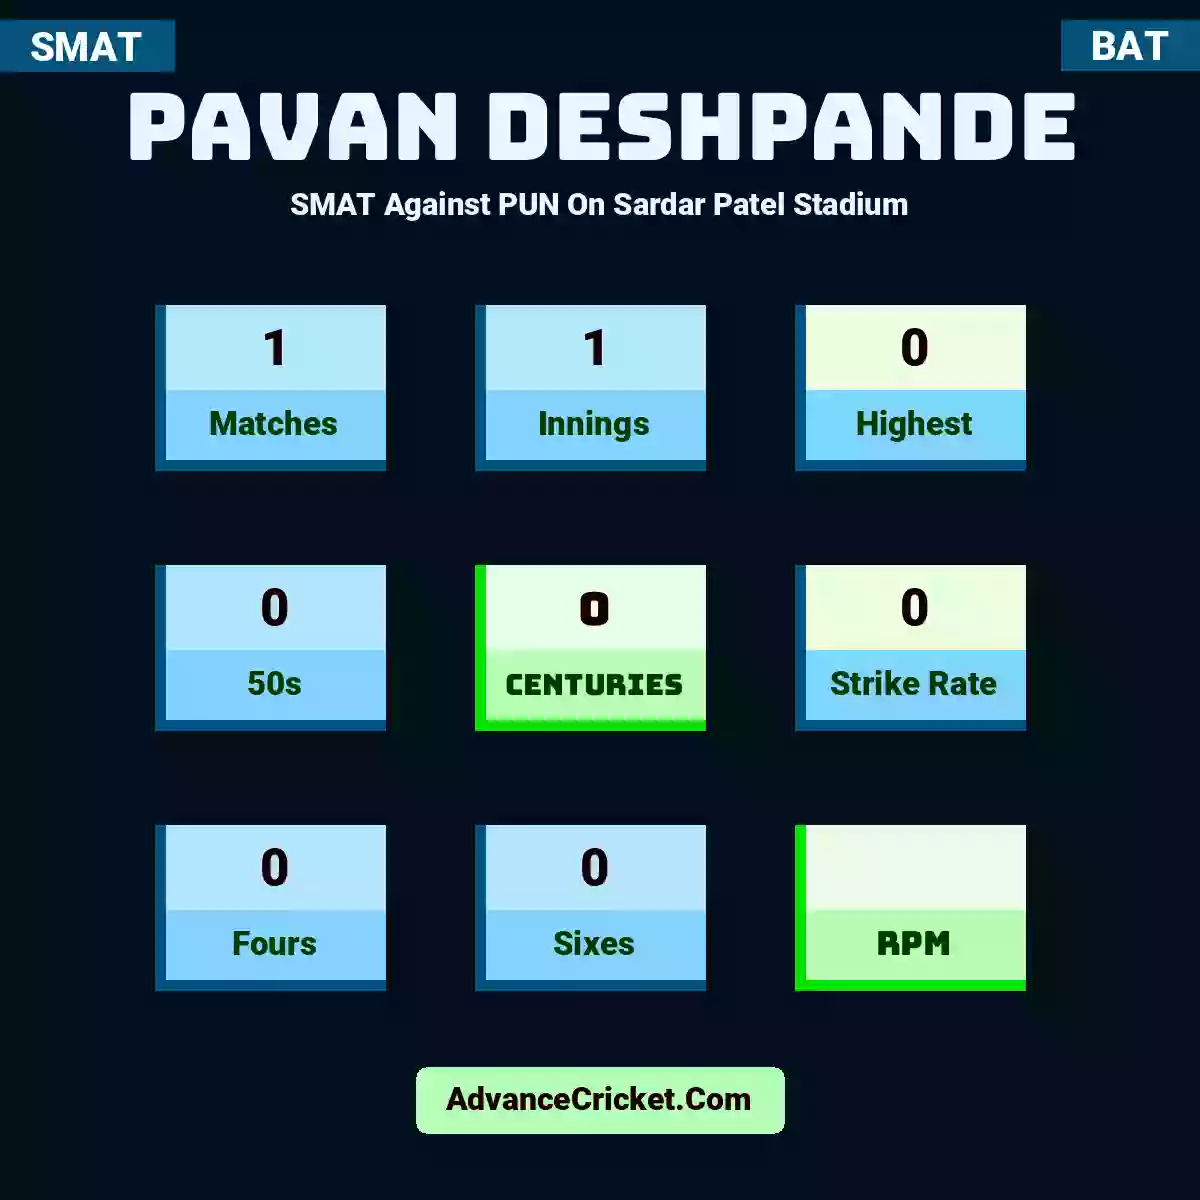 Pavan Deshpande SMAT  Against PUN On Sardar Patel Stadium, Pavan Deshpande played 1 matches, scored 0 runs as highest, 0 half-centuries, and 0 centuries, with a strike rate of 0. P.Deshpande hit 0 fours and 0 sixes.